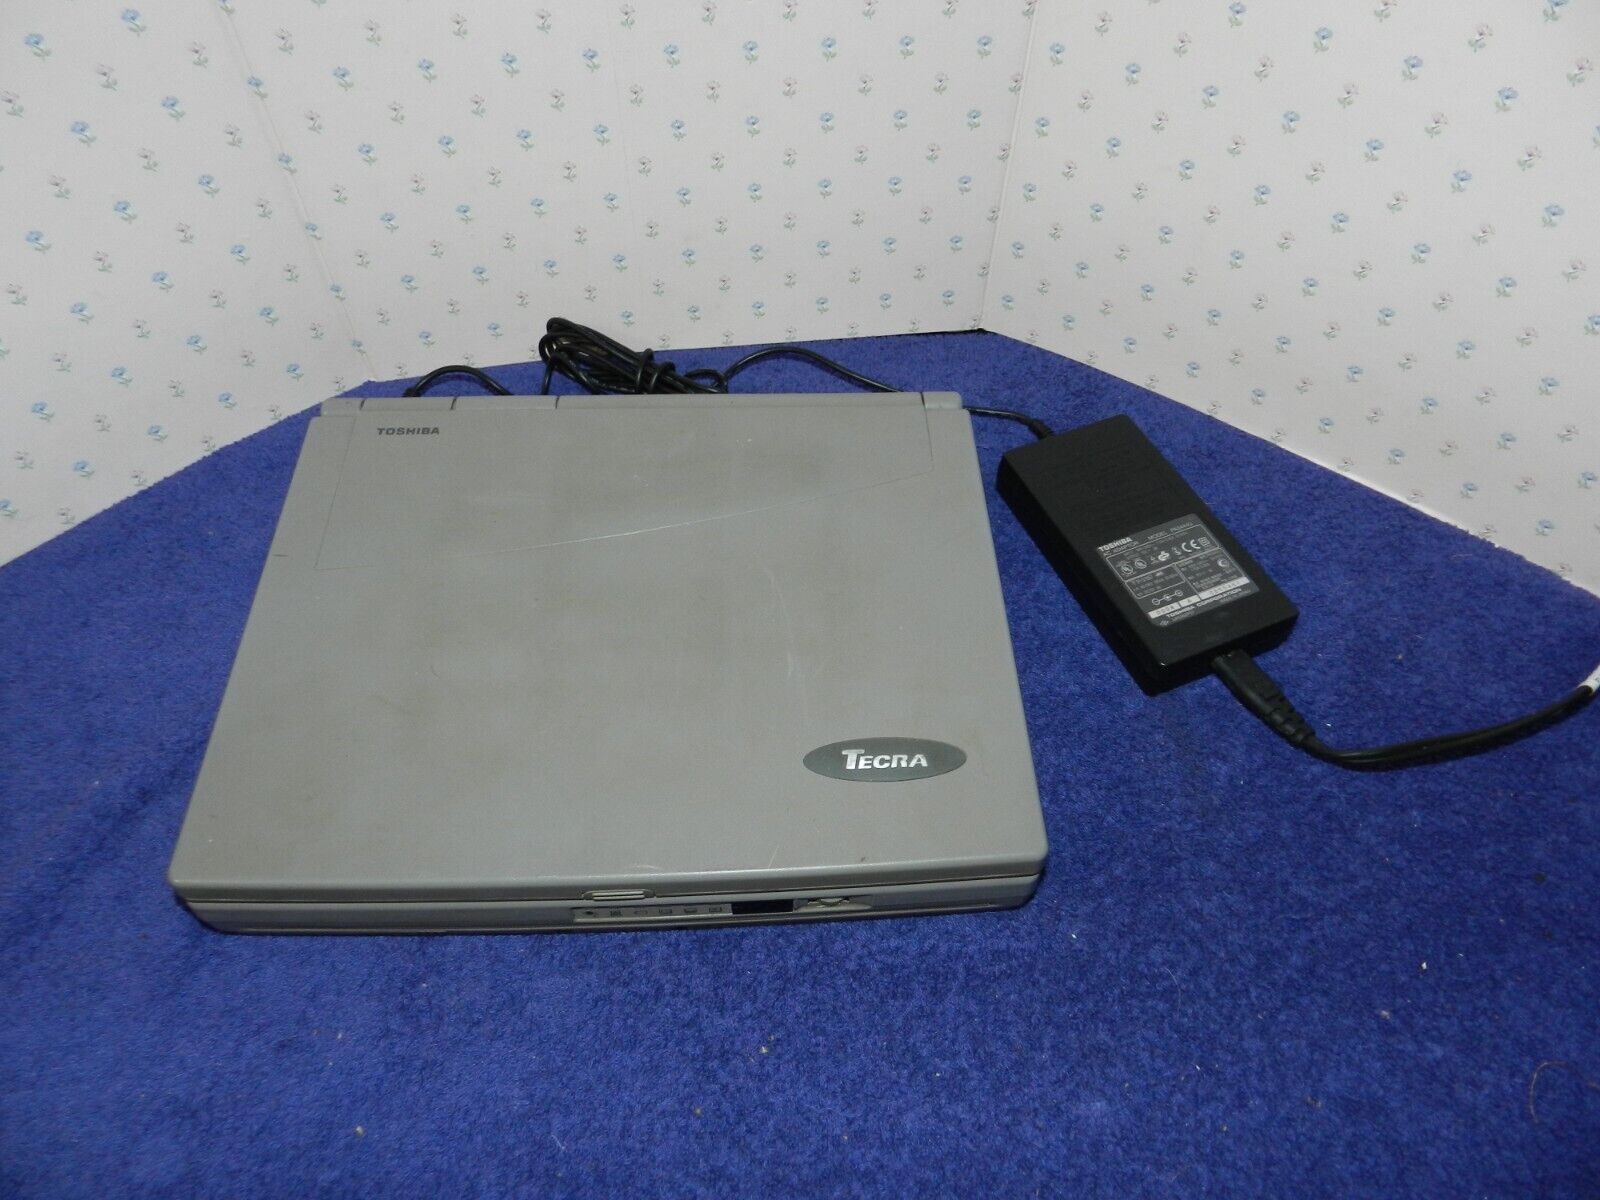 Vintage Toshiba Tecra 750 CDM Laptop With Power Supply Powers On